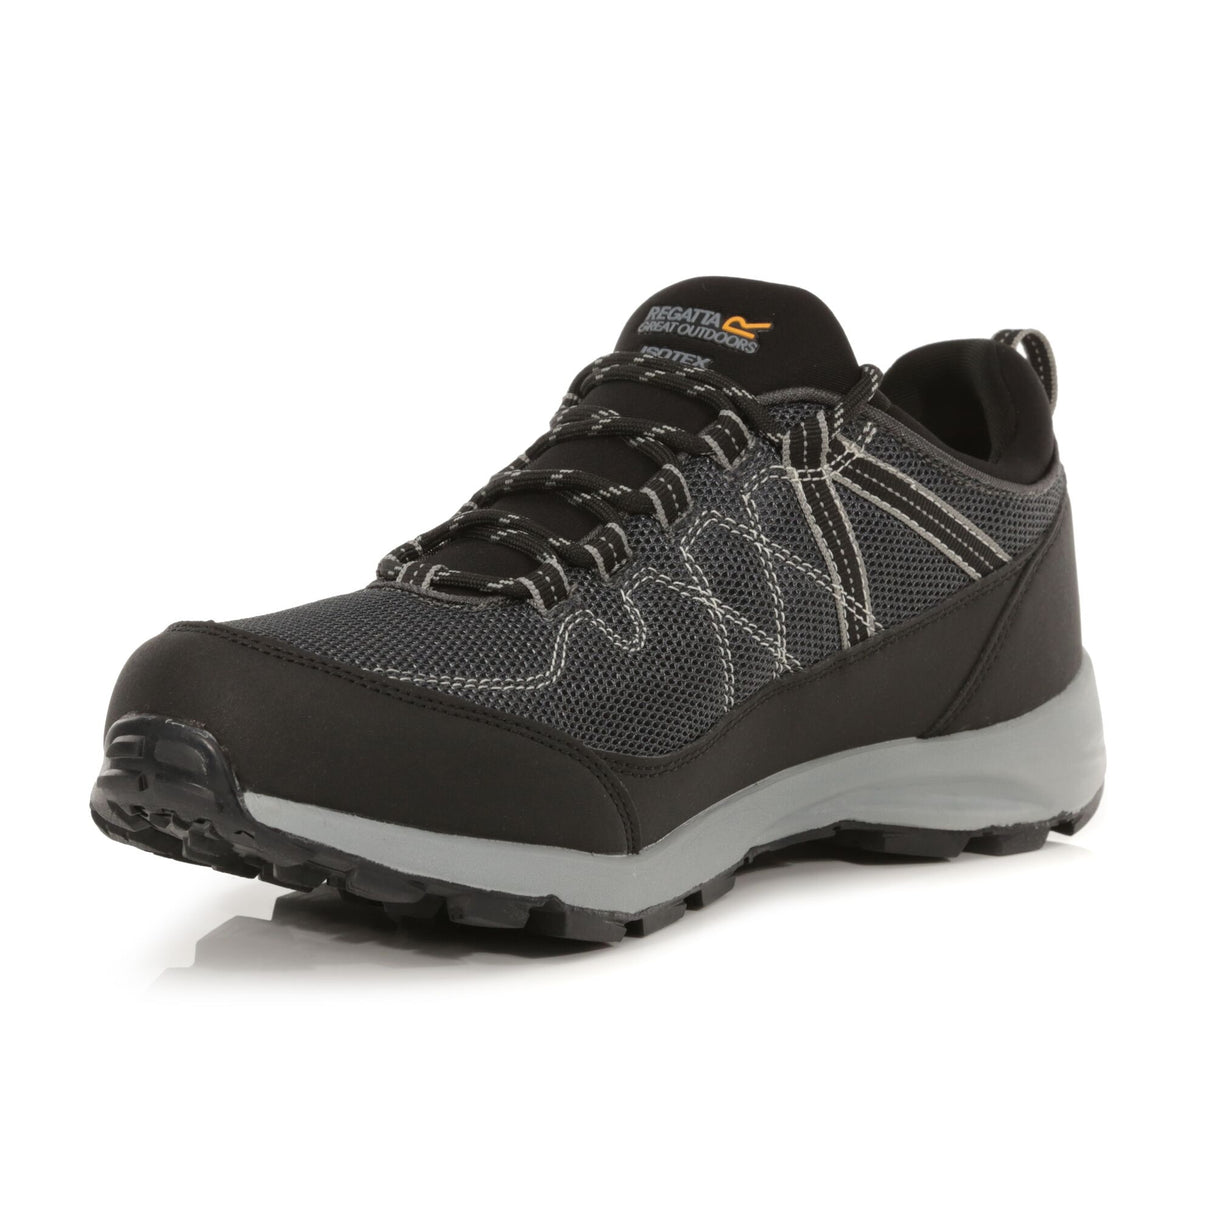 Regatta Samaris Lite Low Mens Waterproof Walking Hiking Shoes - Black/Steel